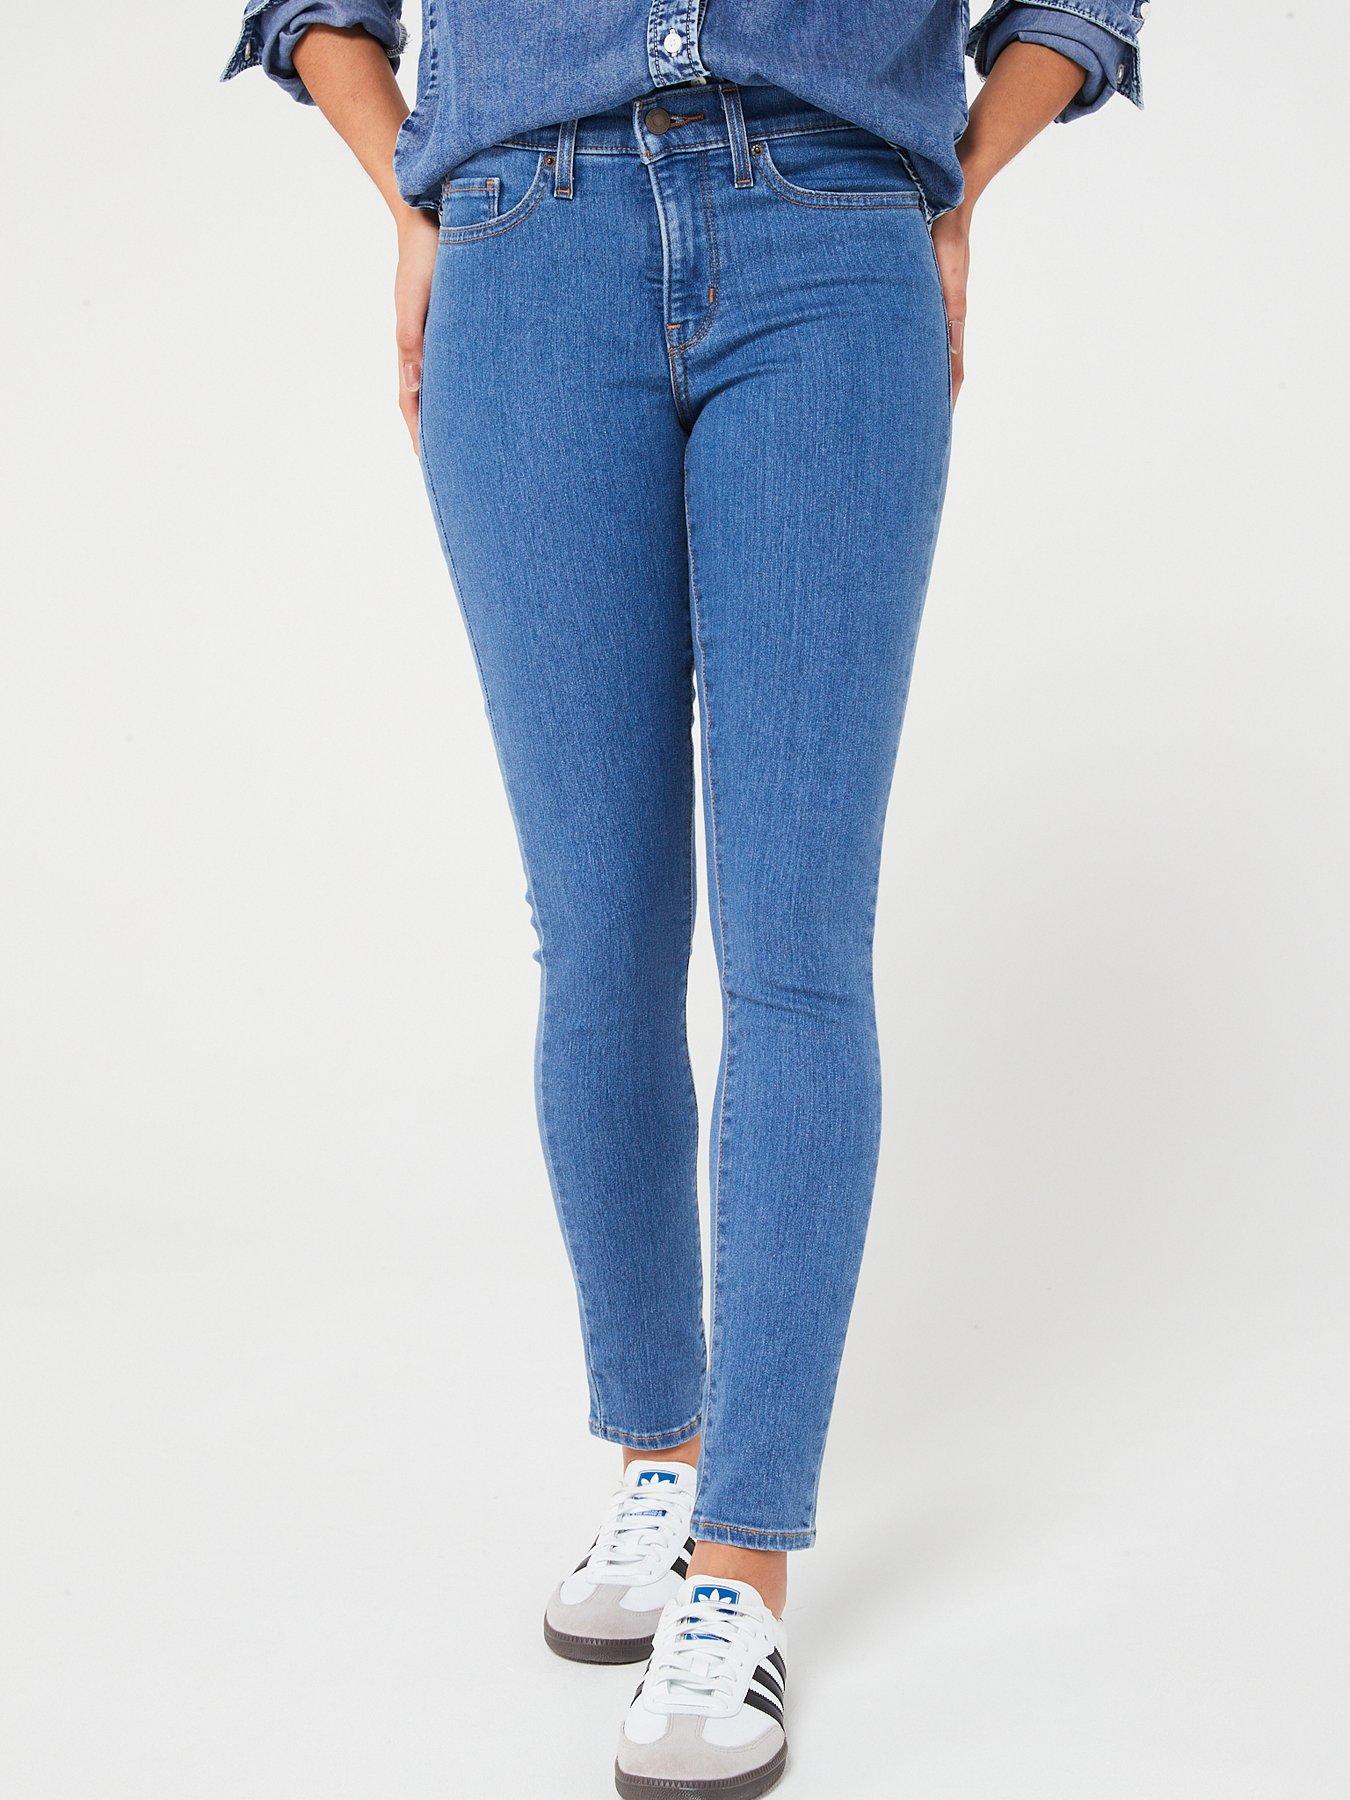 Skinny Jeans for Women, Denim Skinny Jeans